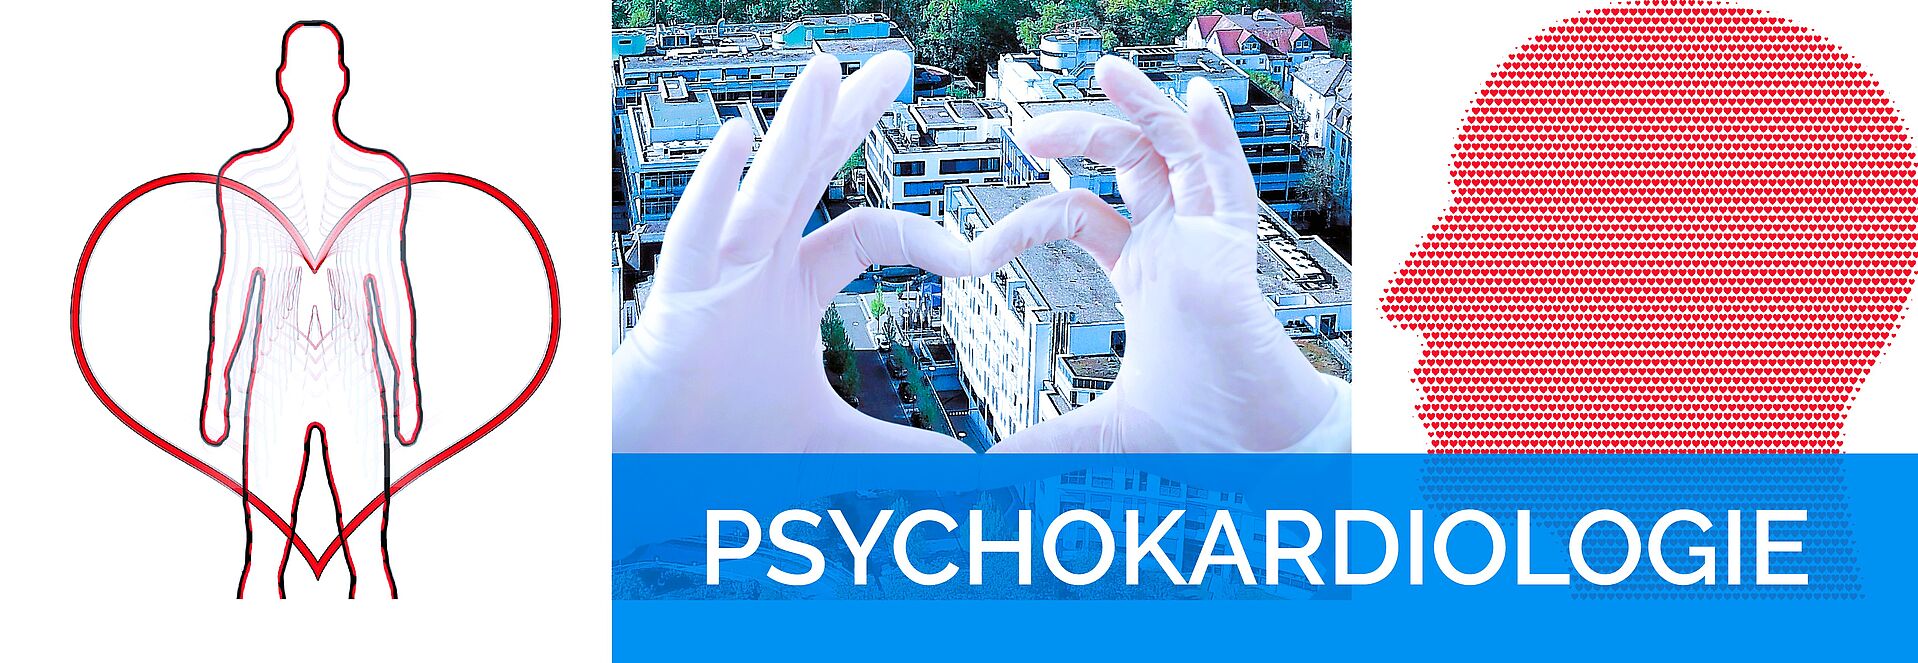 Psychokardiologie an der Kerckhoff-Klinik